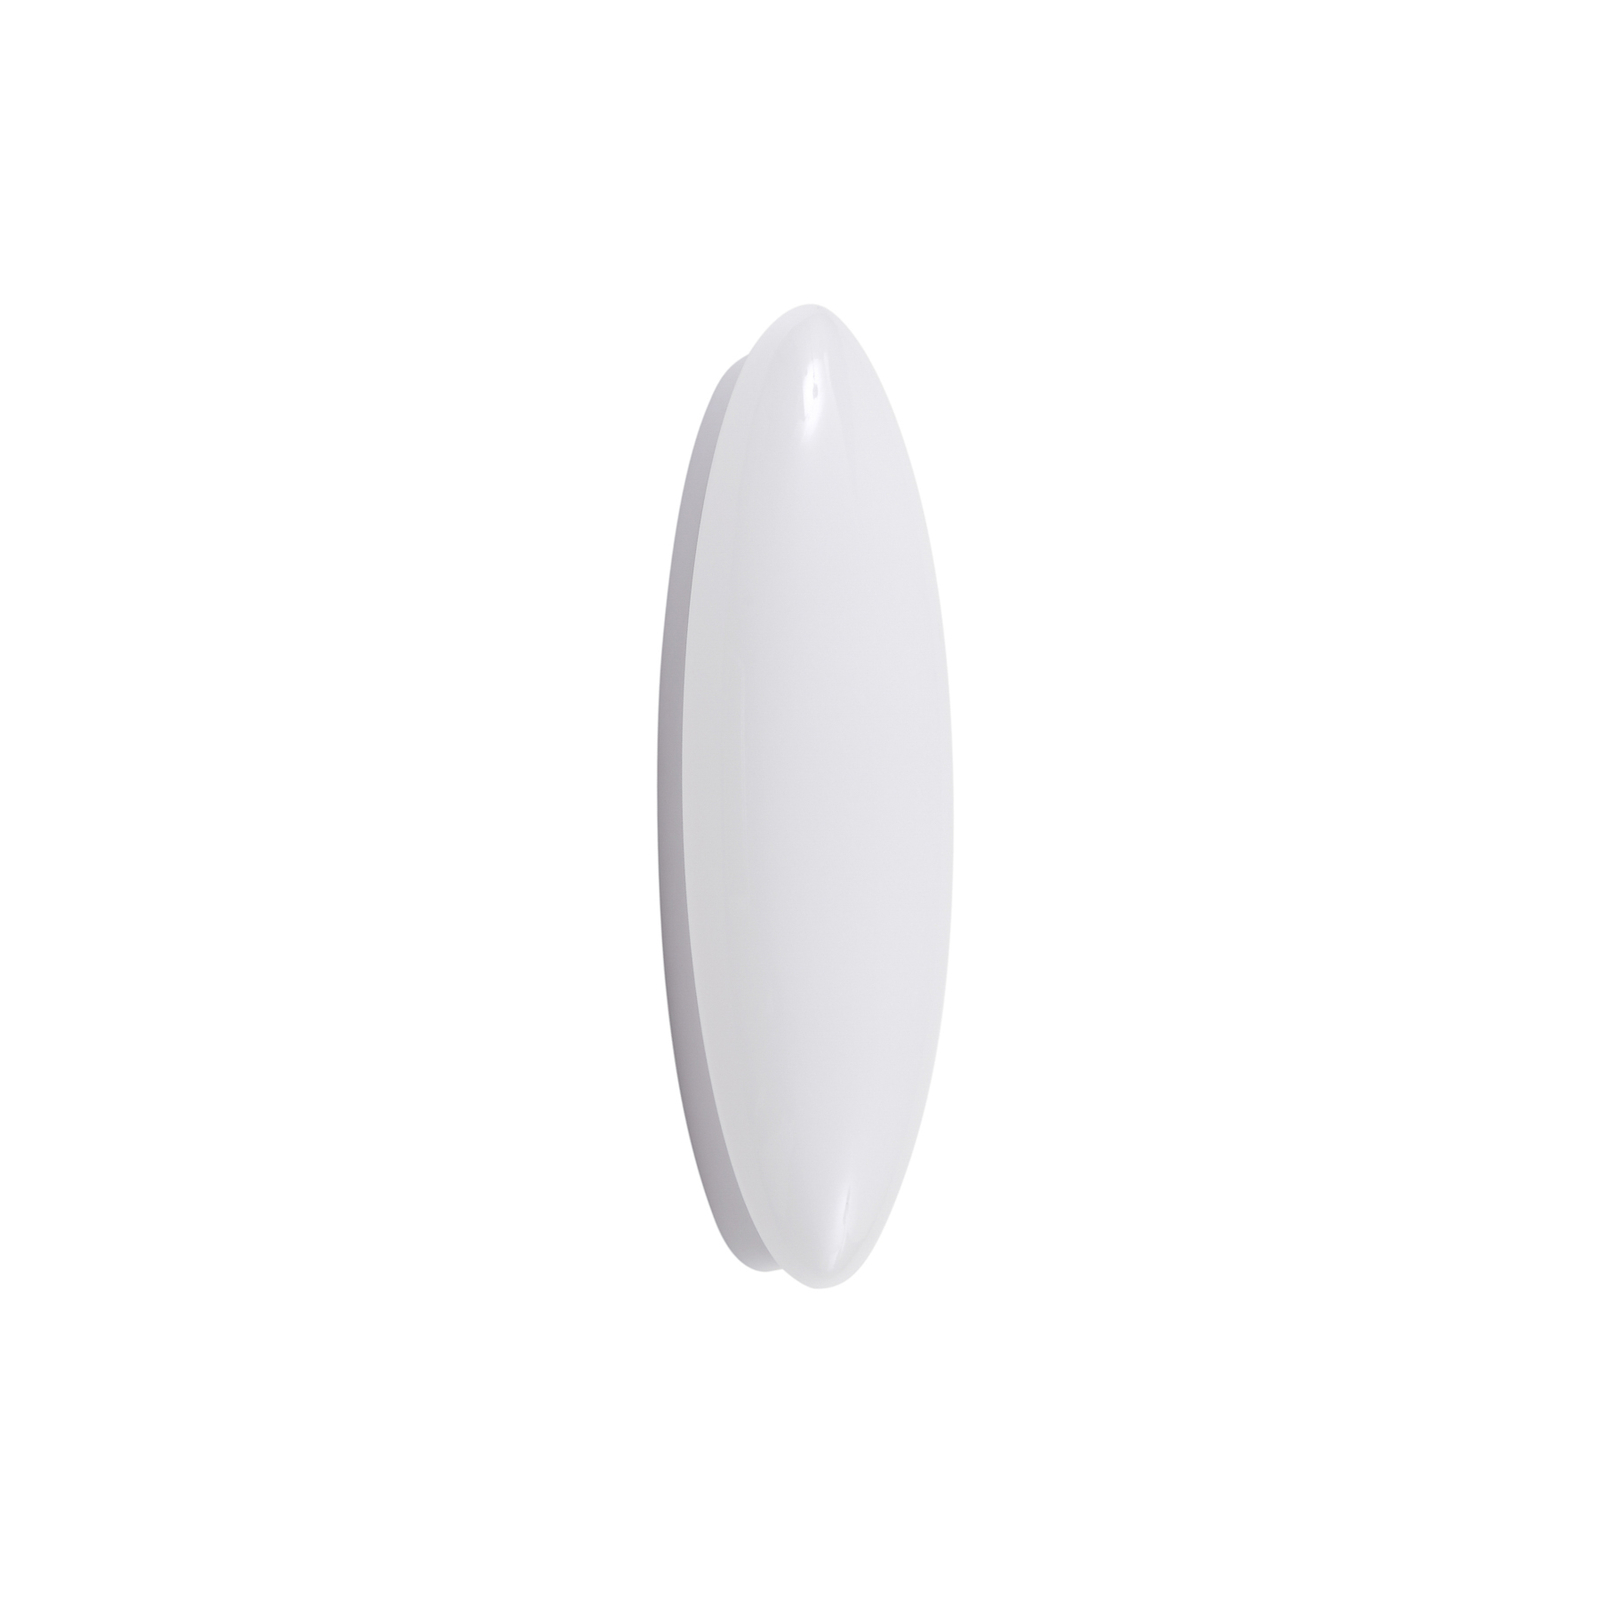 Lucande LED-Wandleuchte Leihlo, weiß, Kunststoff, 8 cm hoch